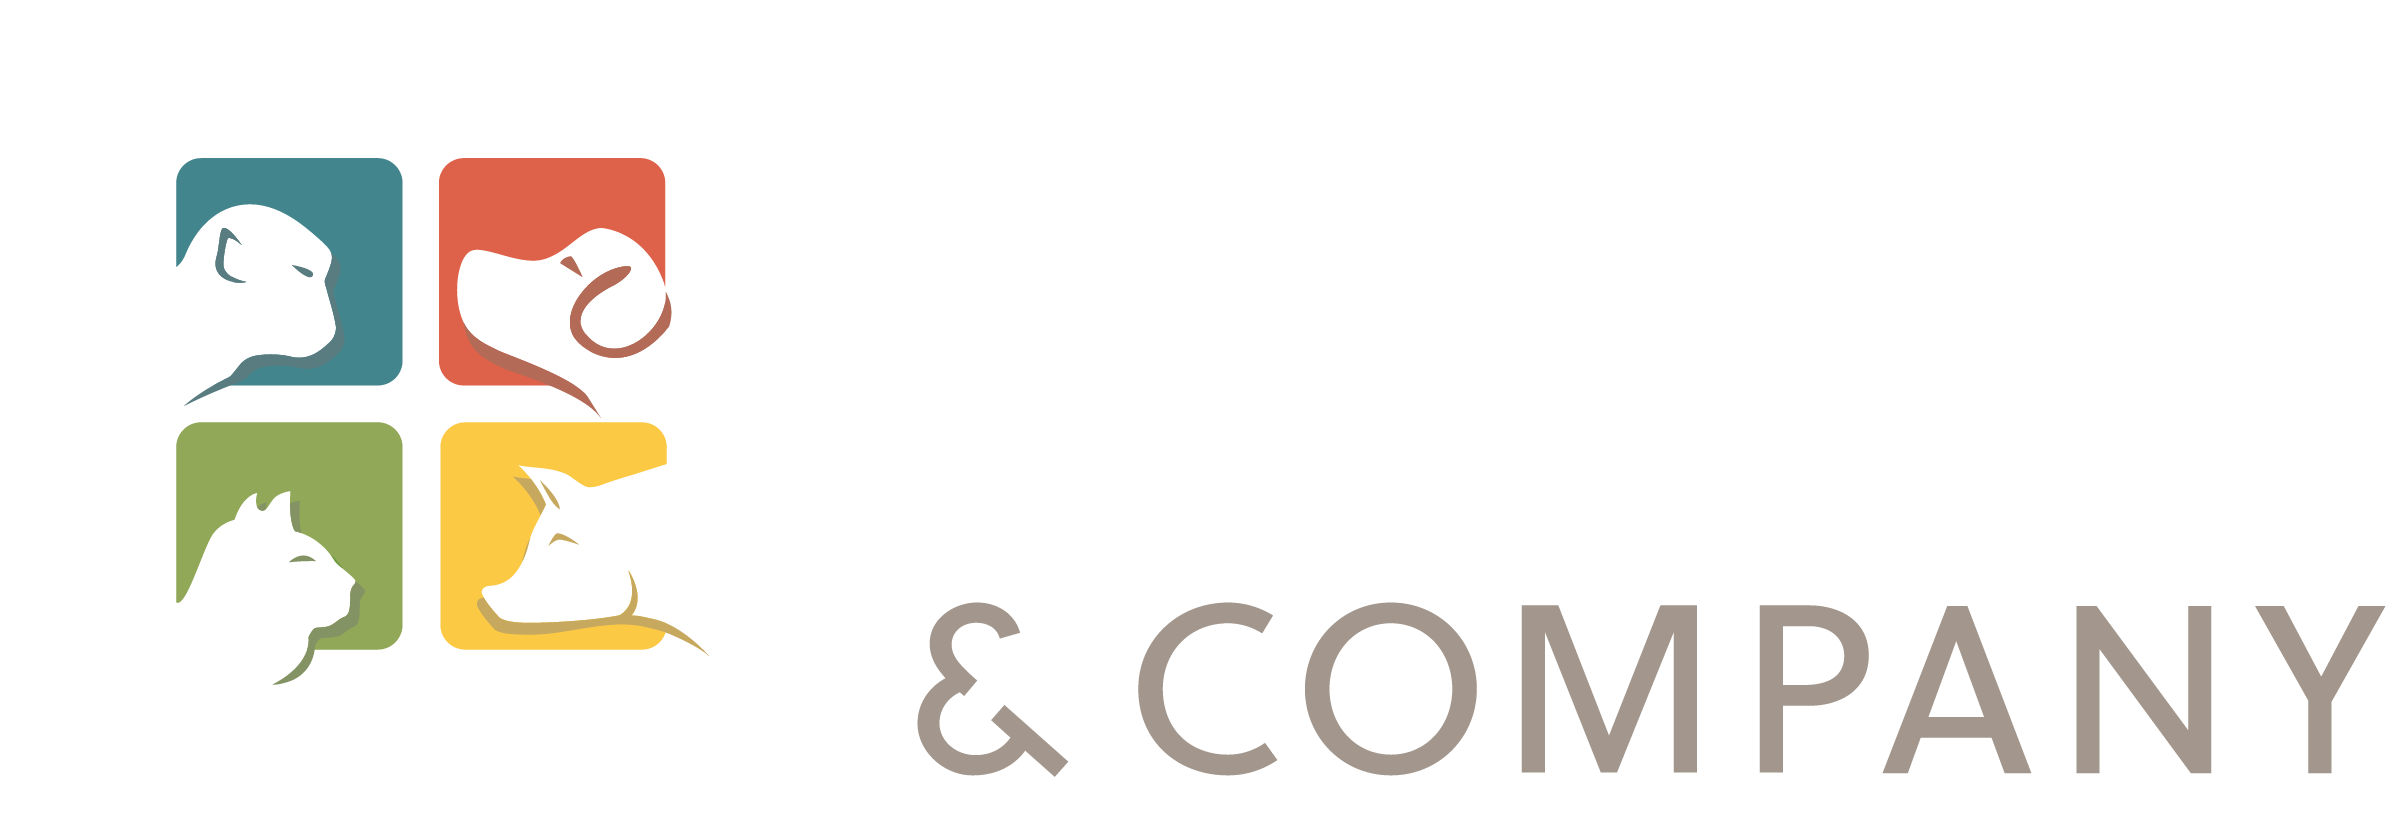 Britz & Company